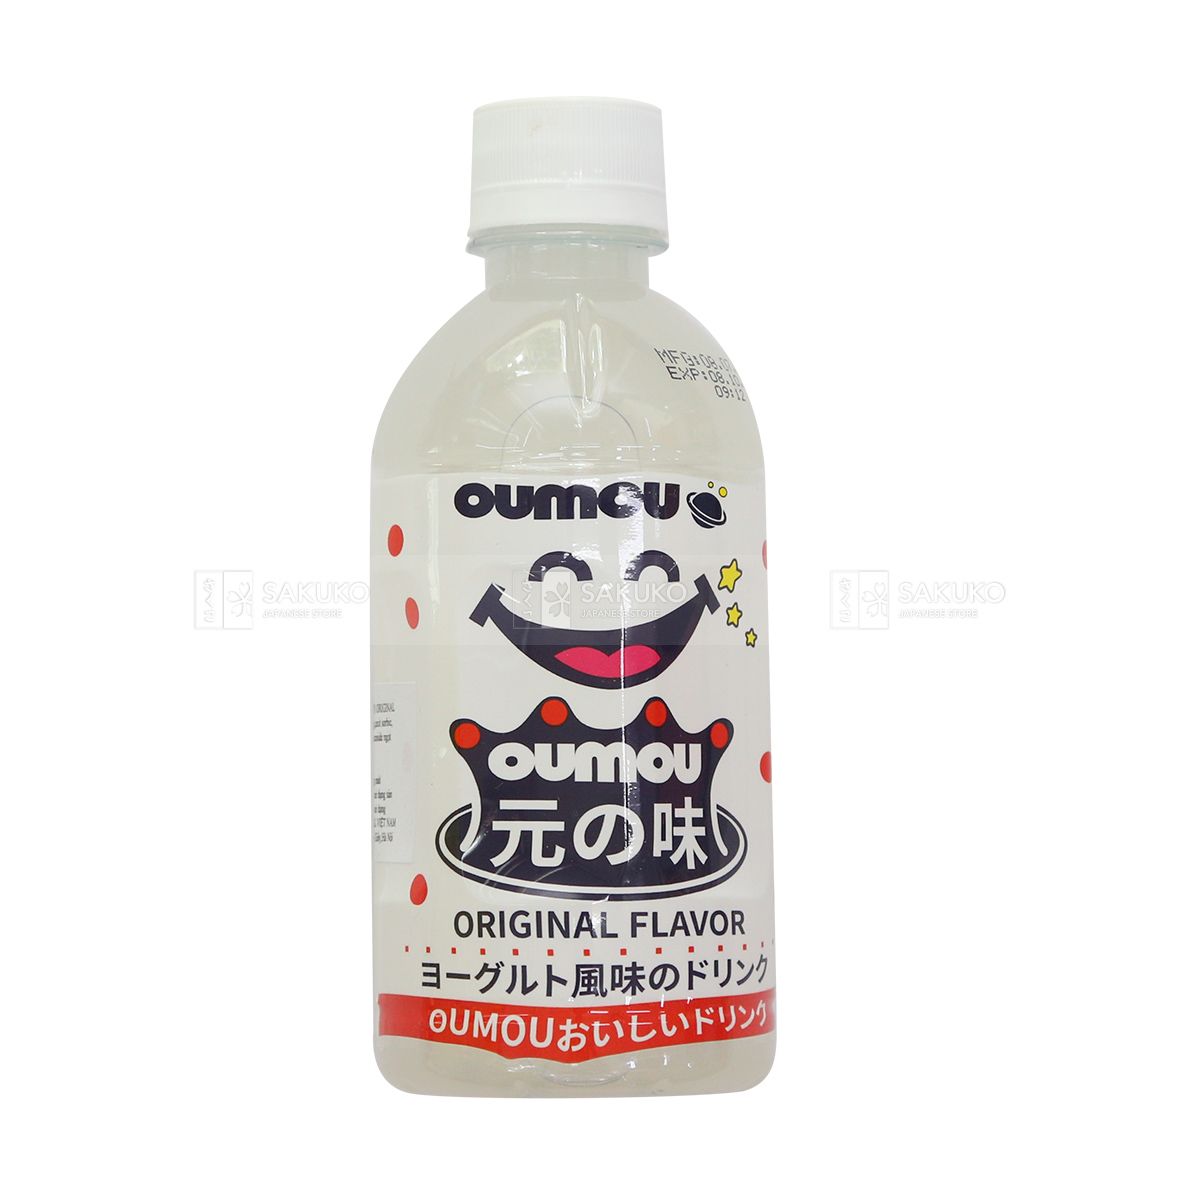  OUMOU- Nước giải khát sữa chua 300ml 